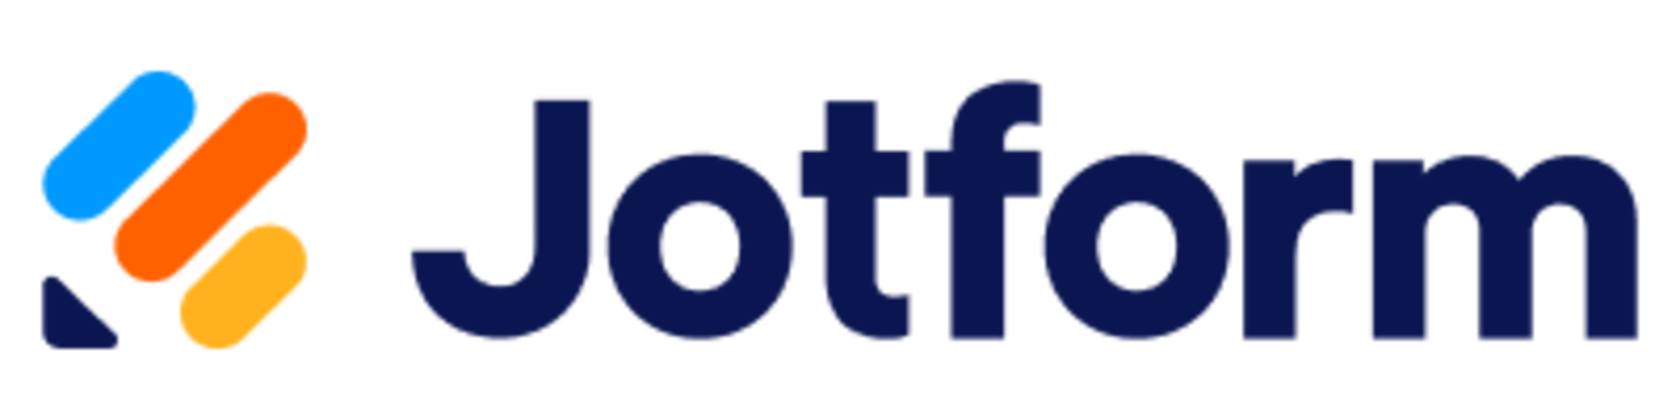 jotform logo transparent 400x100 1